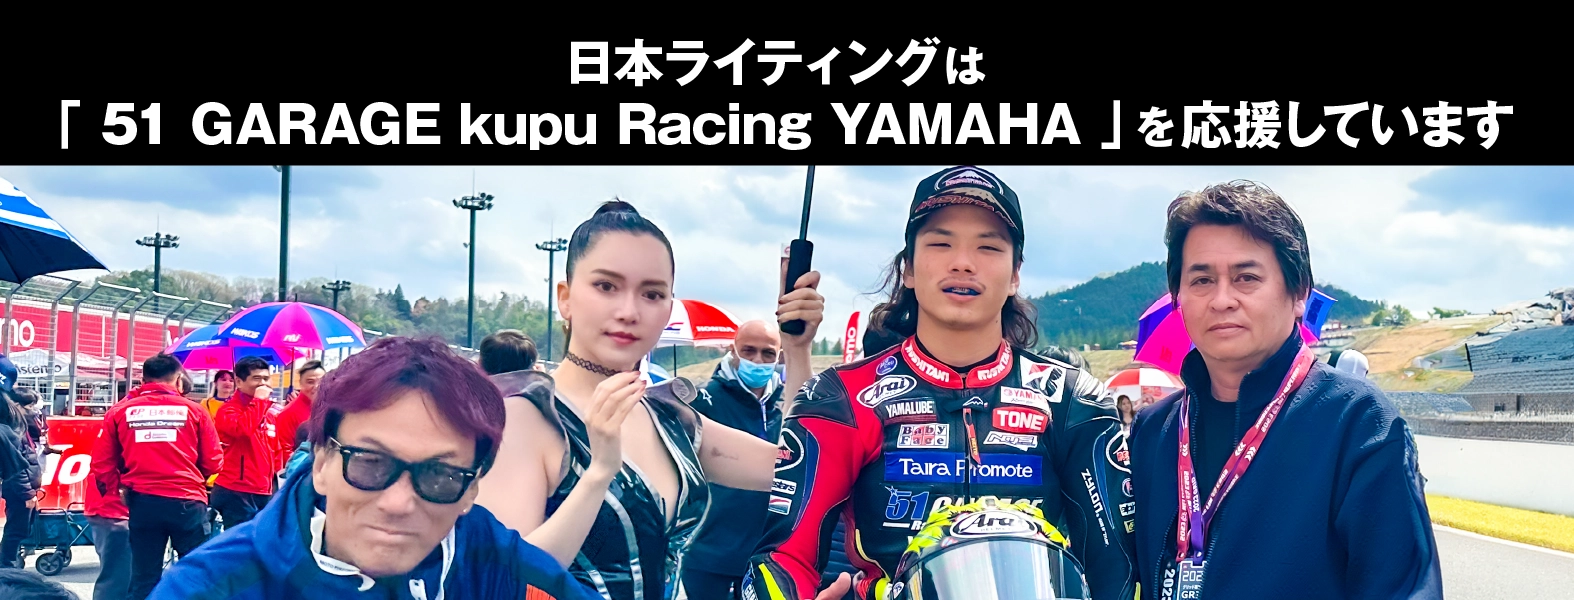 「 51 GARAGE kupu Racing YAMAHA 」応援バナー